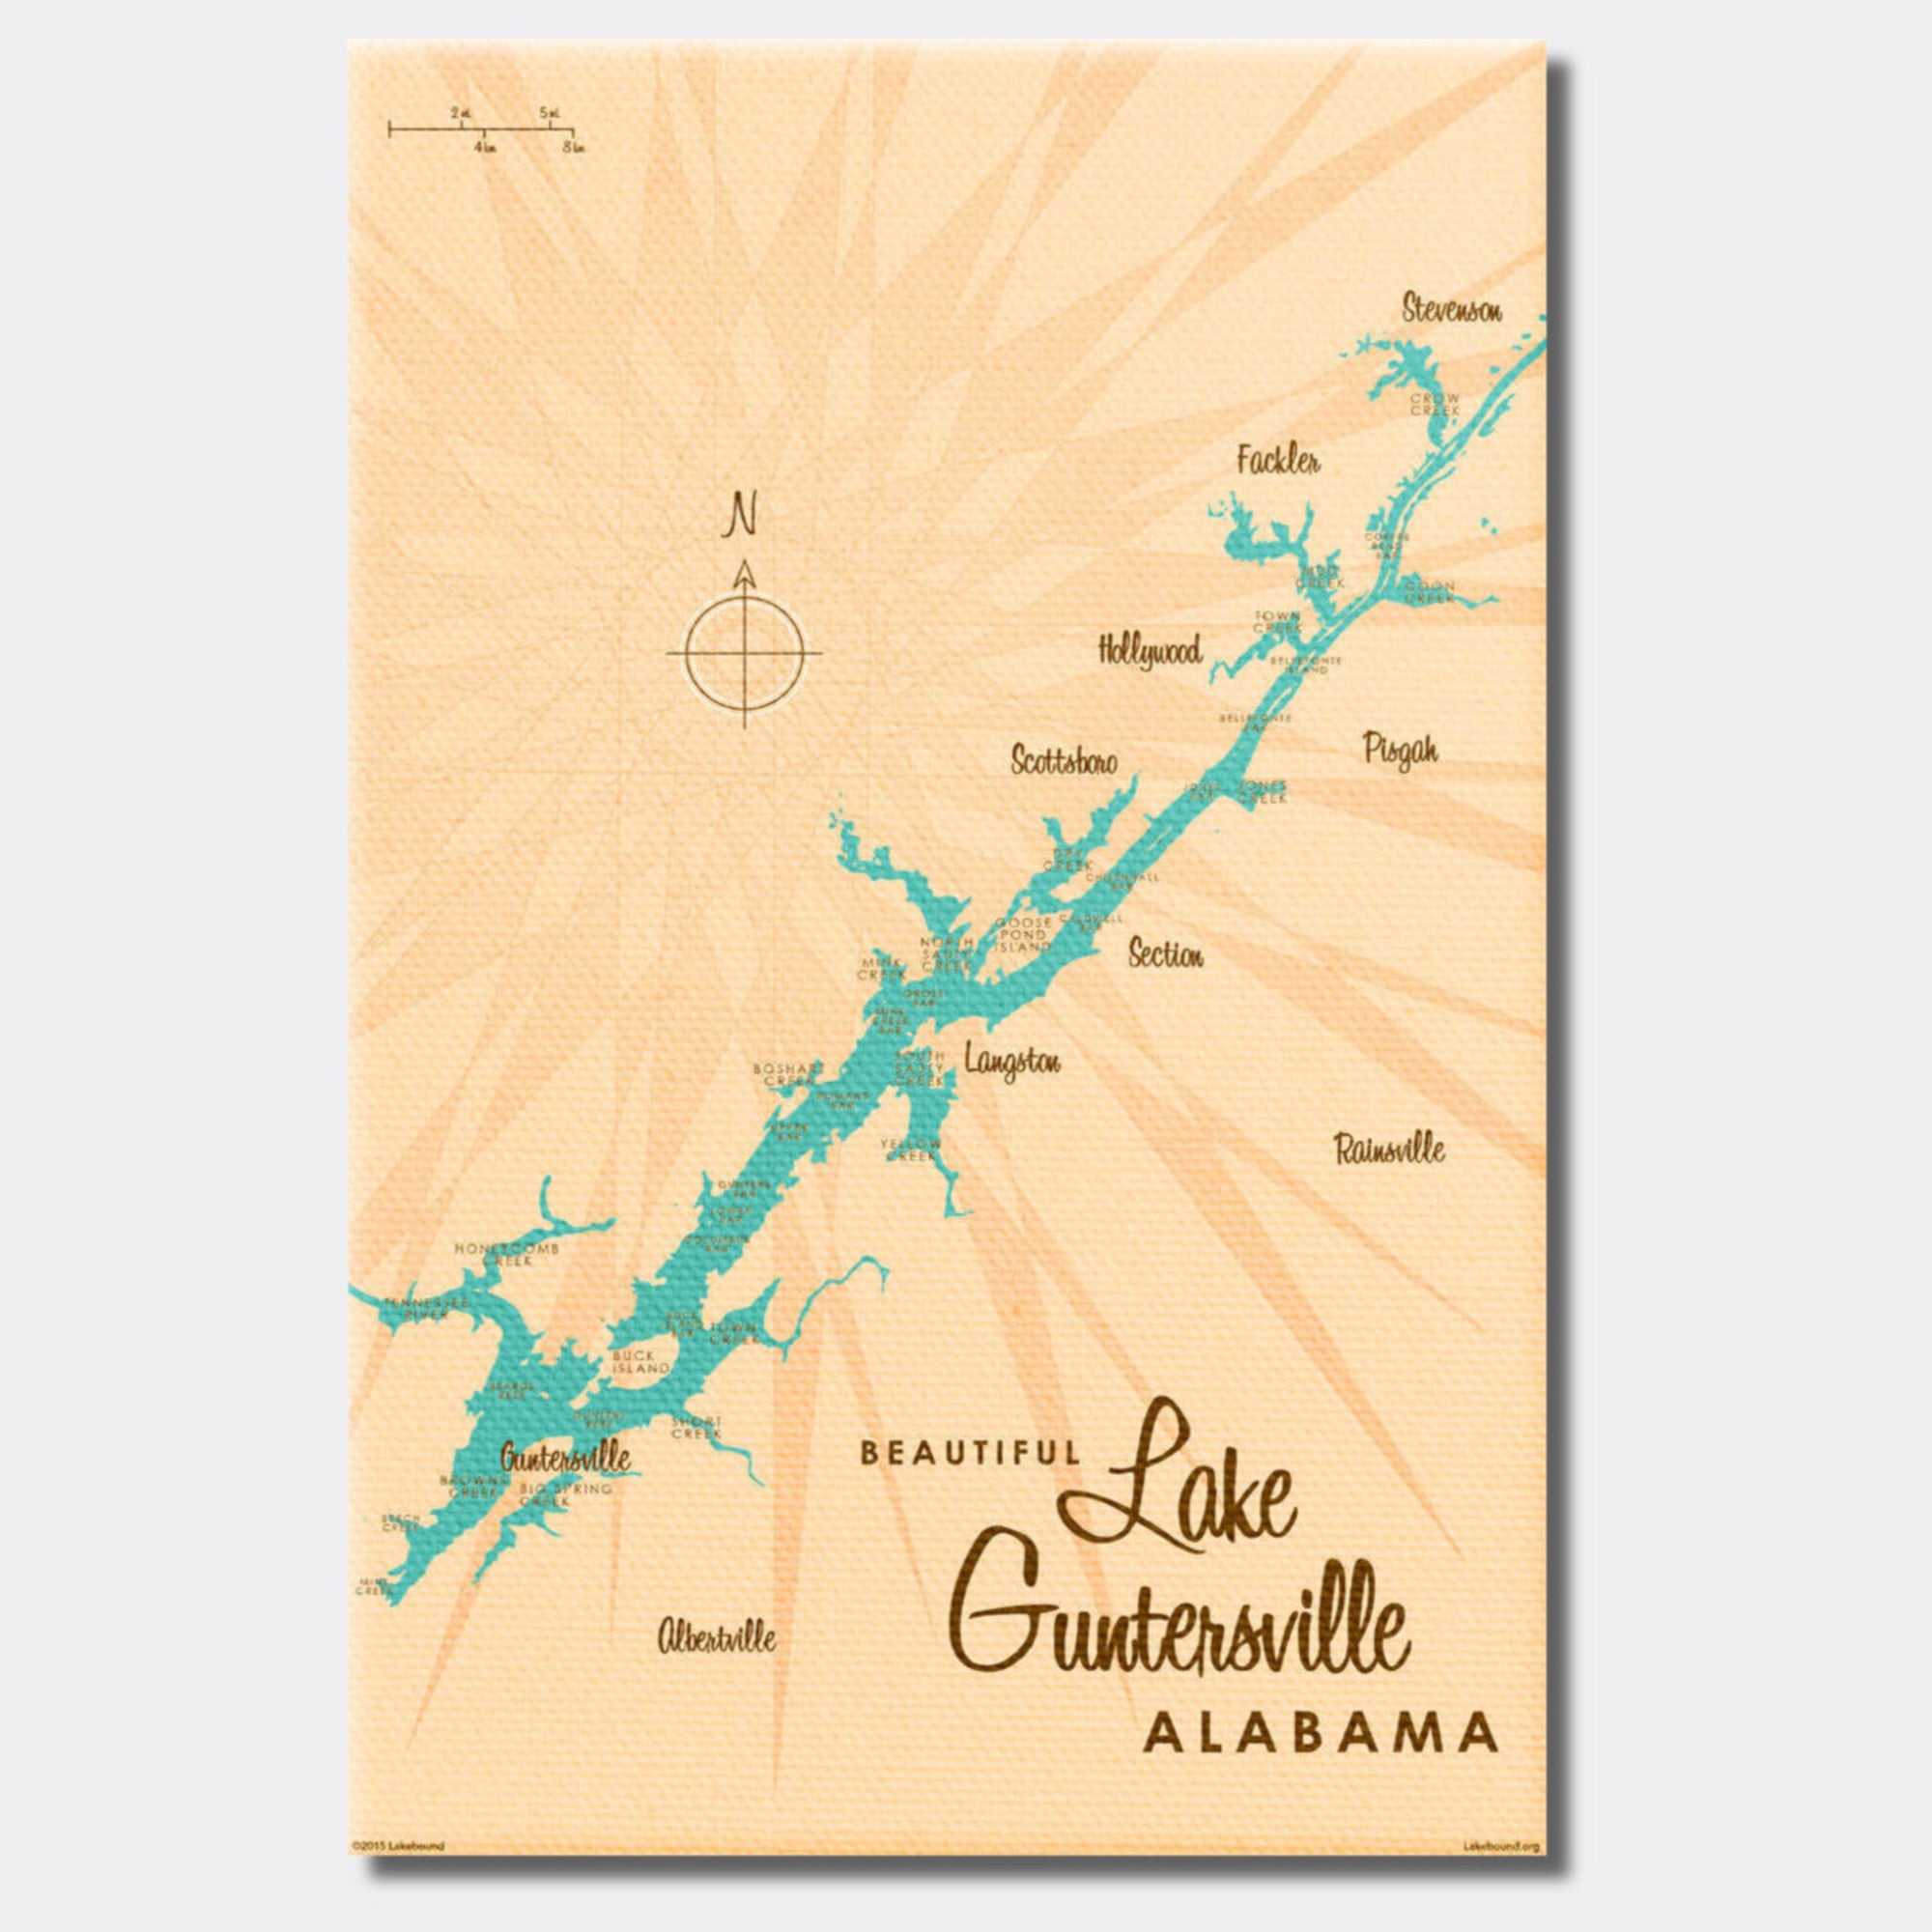 Lake Guntersville Alabama, Canvas Print